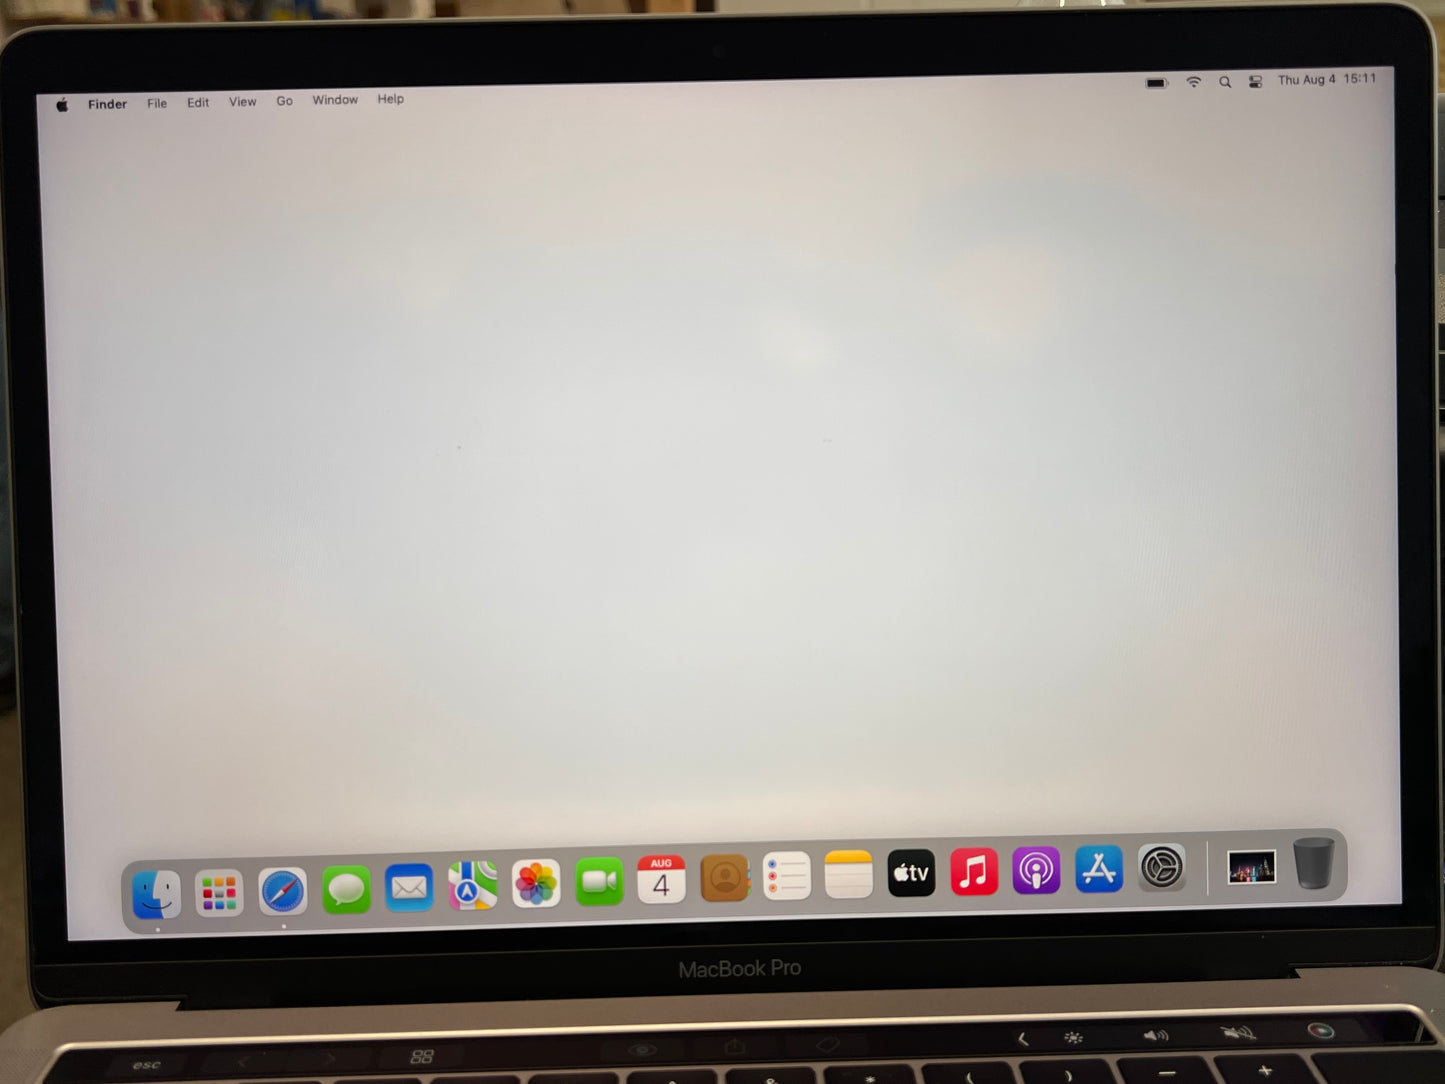 Apple 2018 13 in MacBook Pro TB 2.7GHz Quad-Core i7 16GB RAM 1TB SSD IIPG655